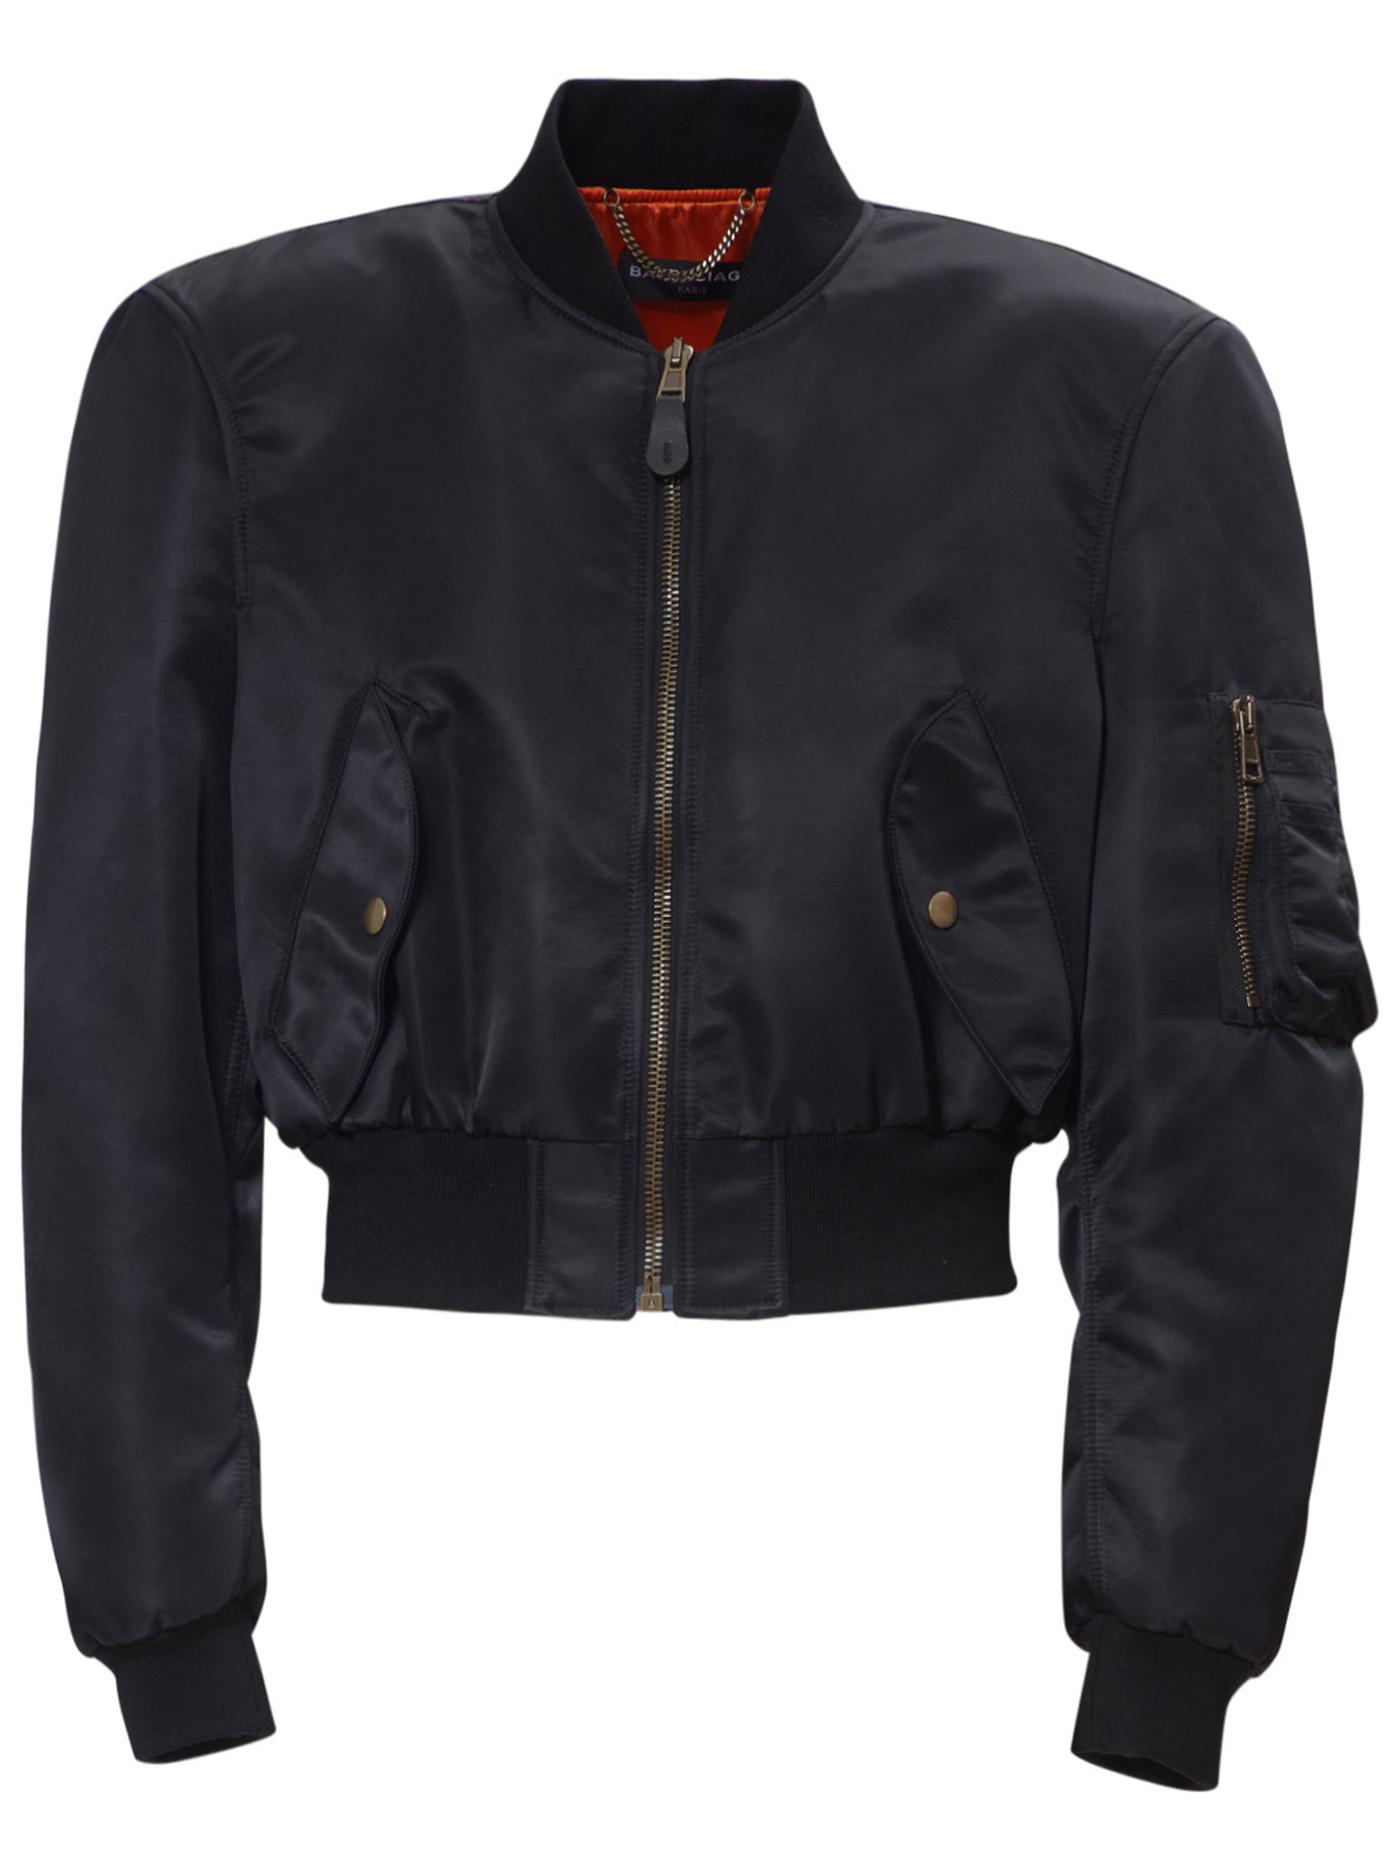 Balenciaga Cropped Nylon Bomber Jacket in Black for Men - Lyst